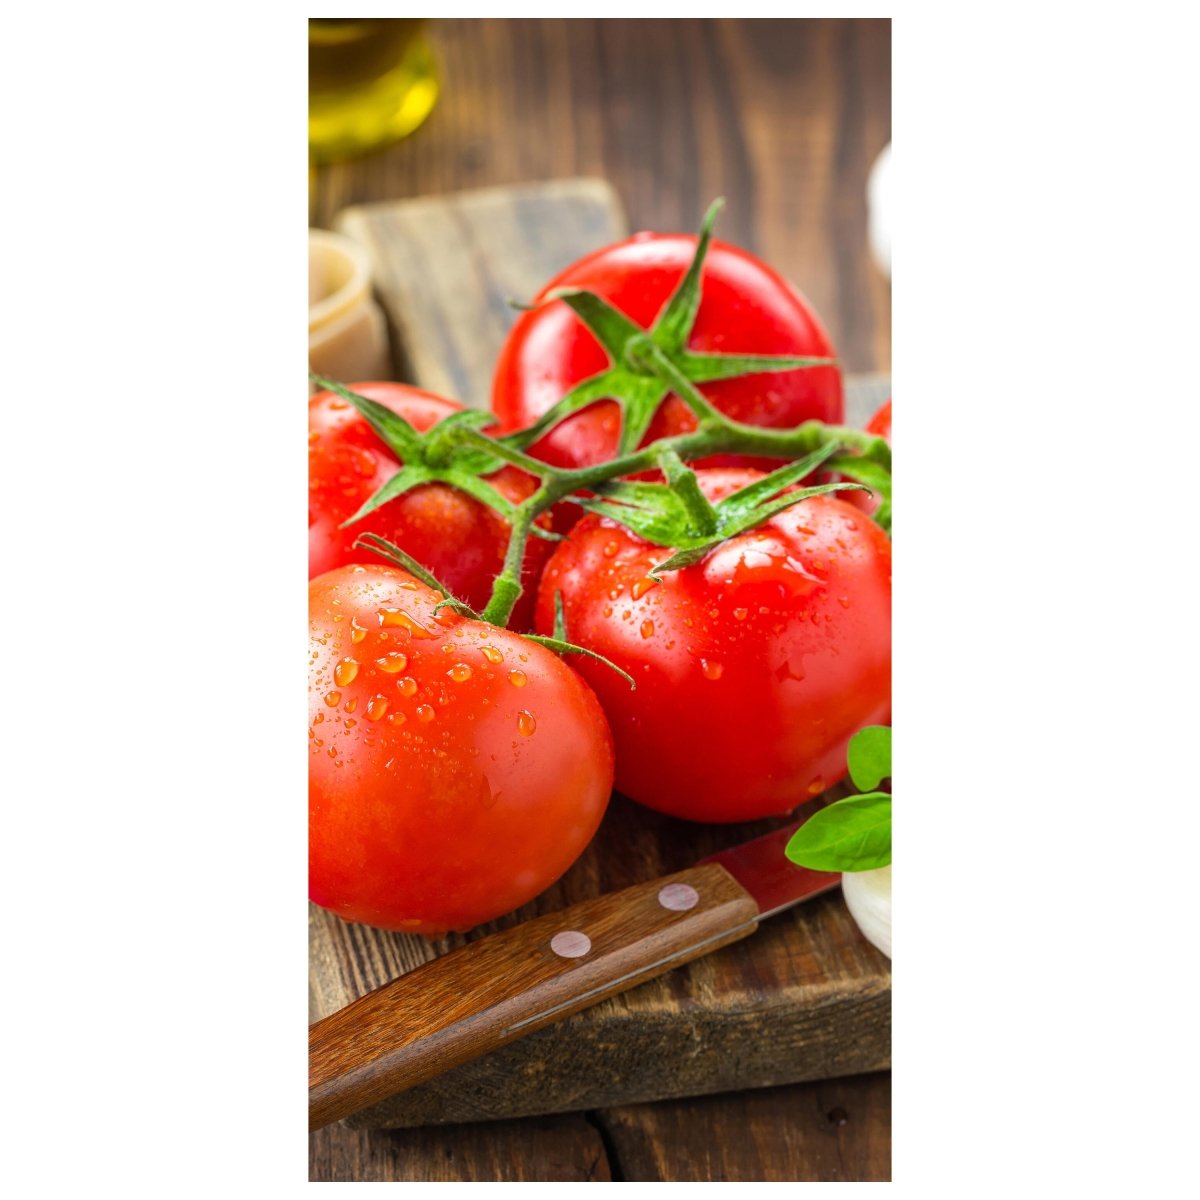 Türtapete Tomaten und Nudeln M1064 - Bild 2